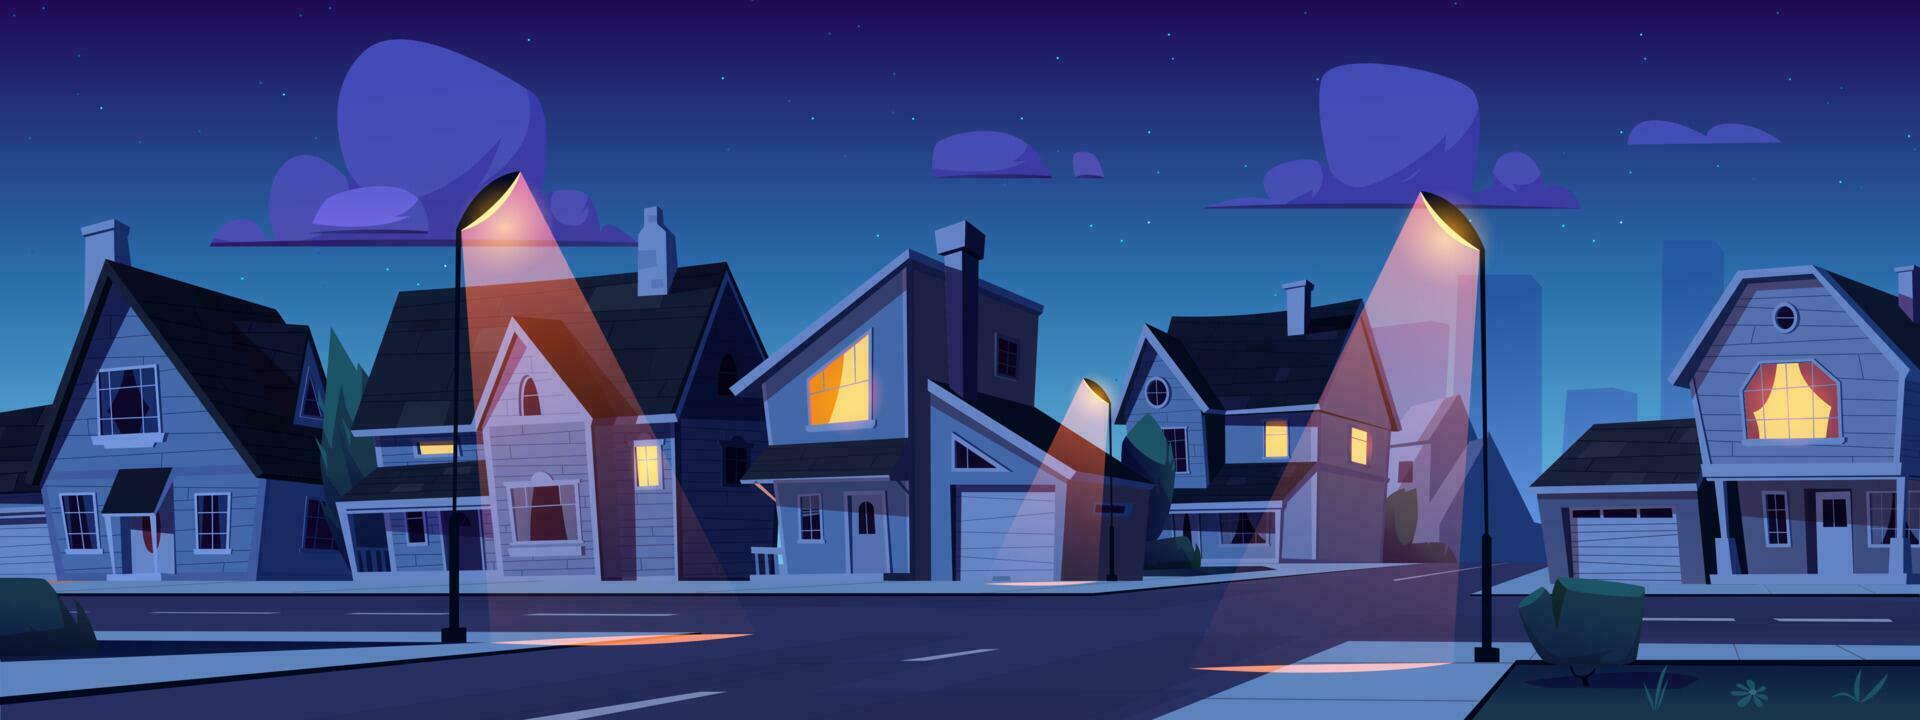 Cartoon suburban town street at night vector